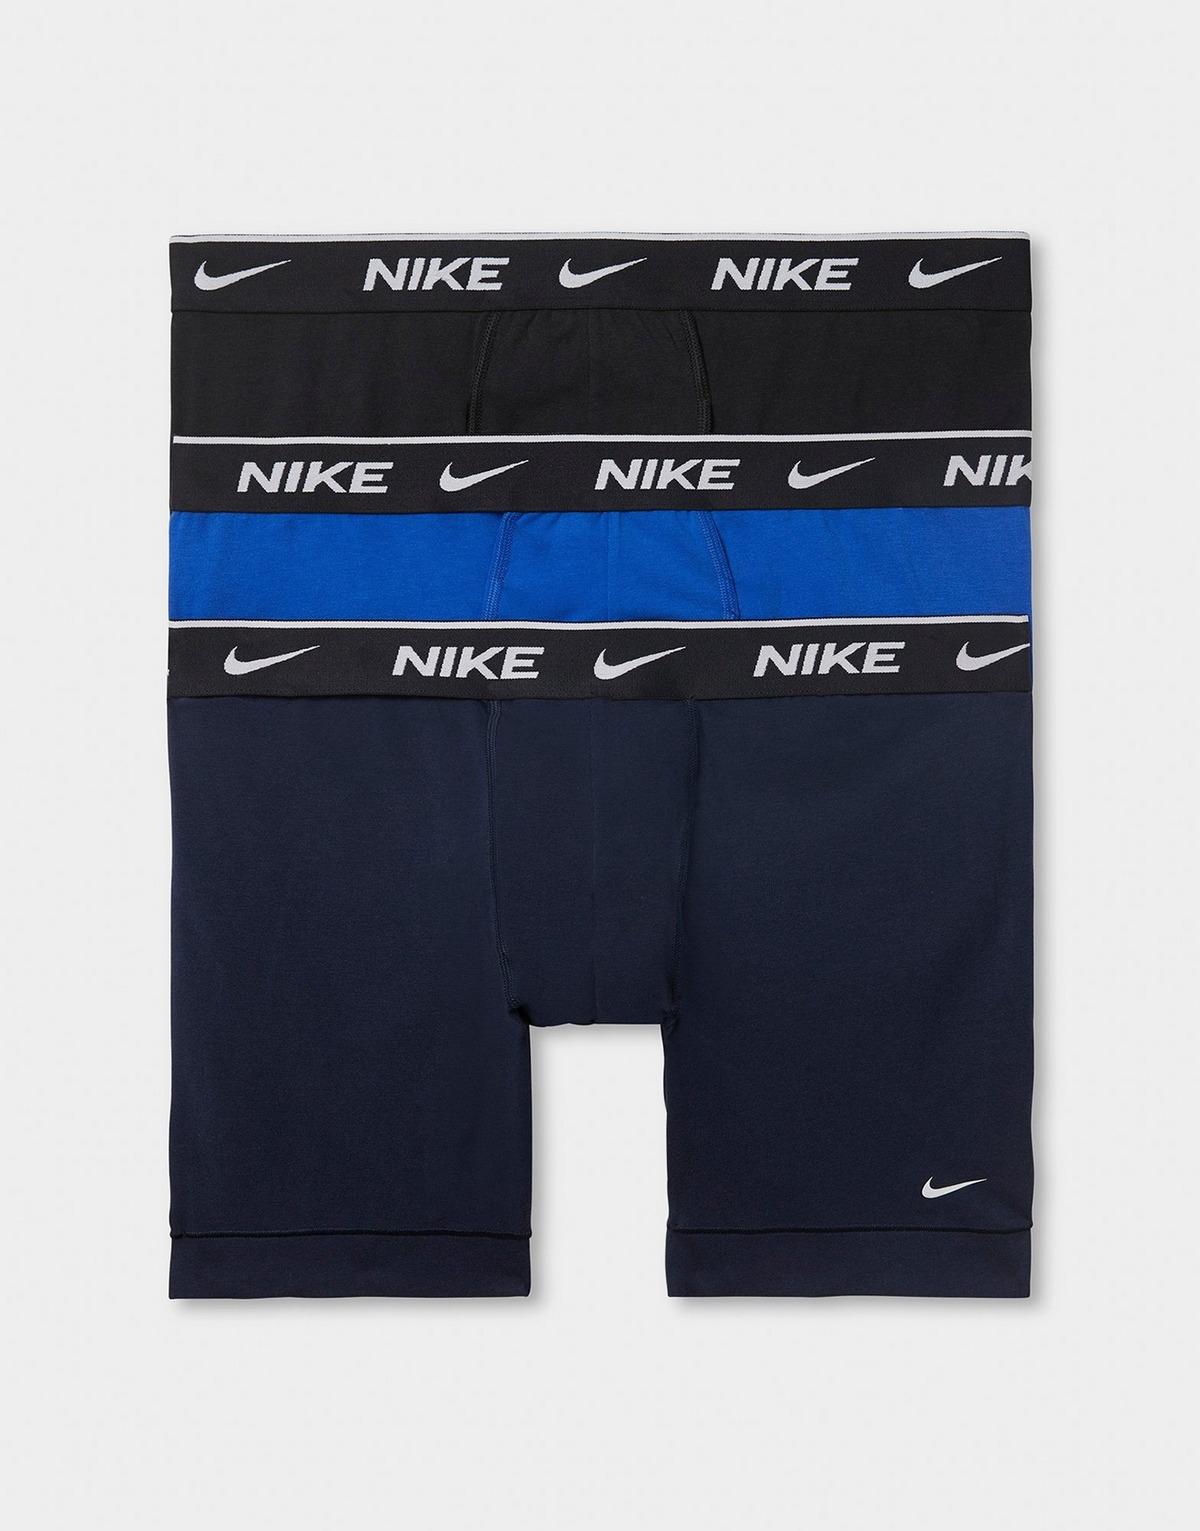 Nike 3-pack Boxer Shorts in Black/Navy/Blue (Blue) for Men - Lyst